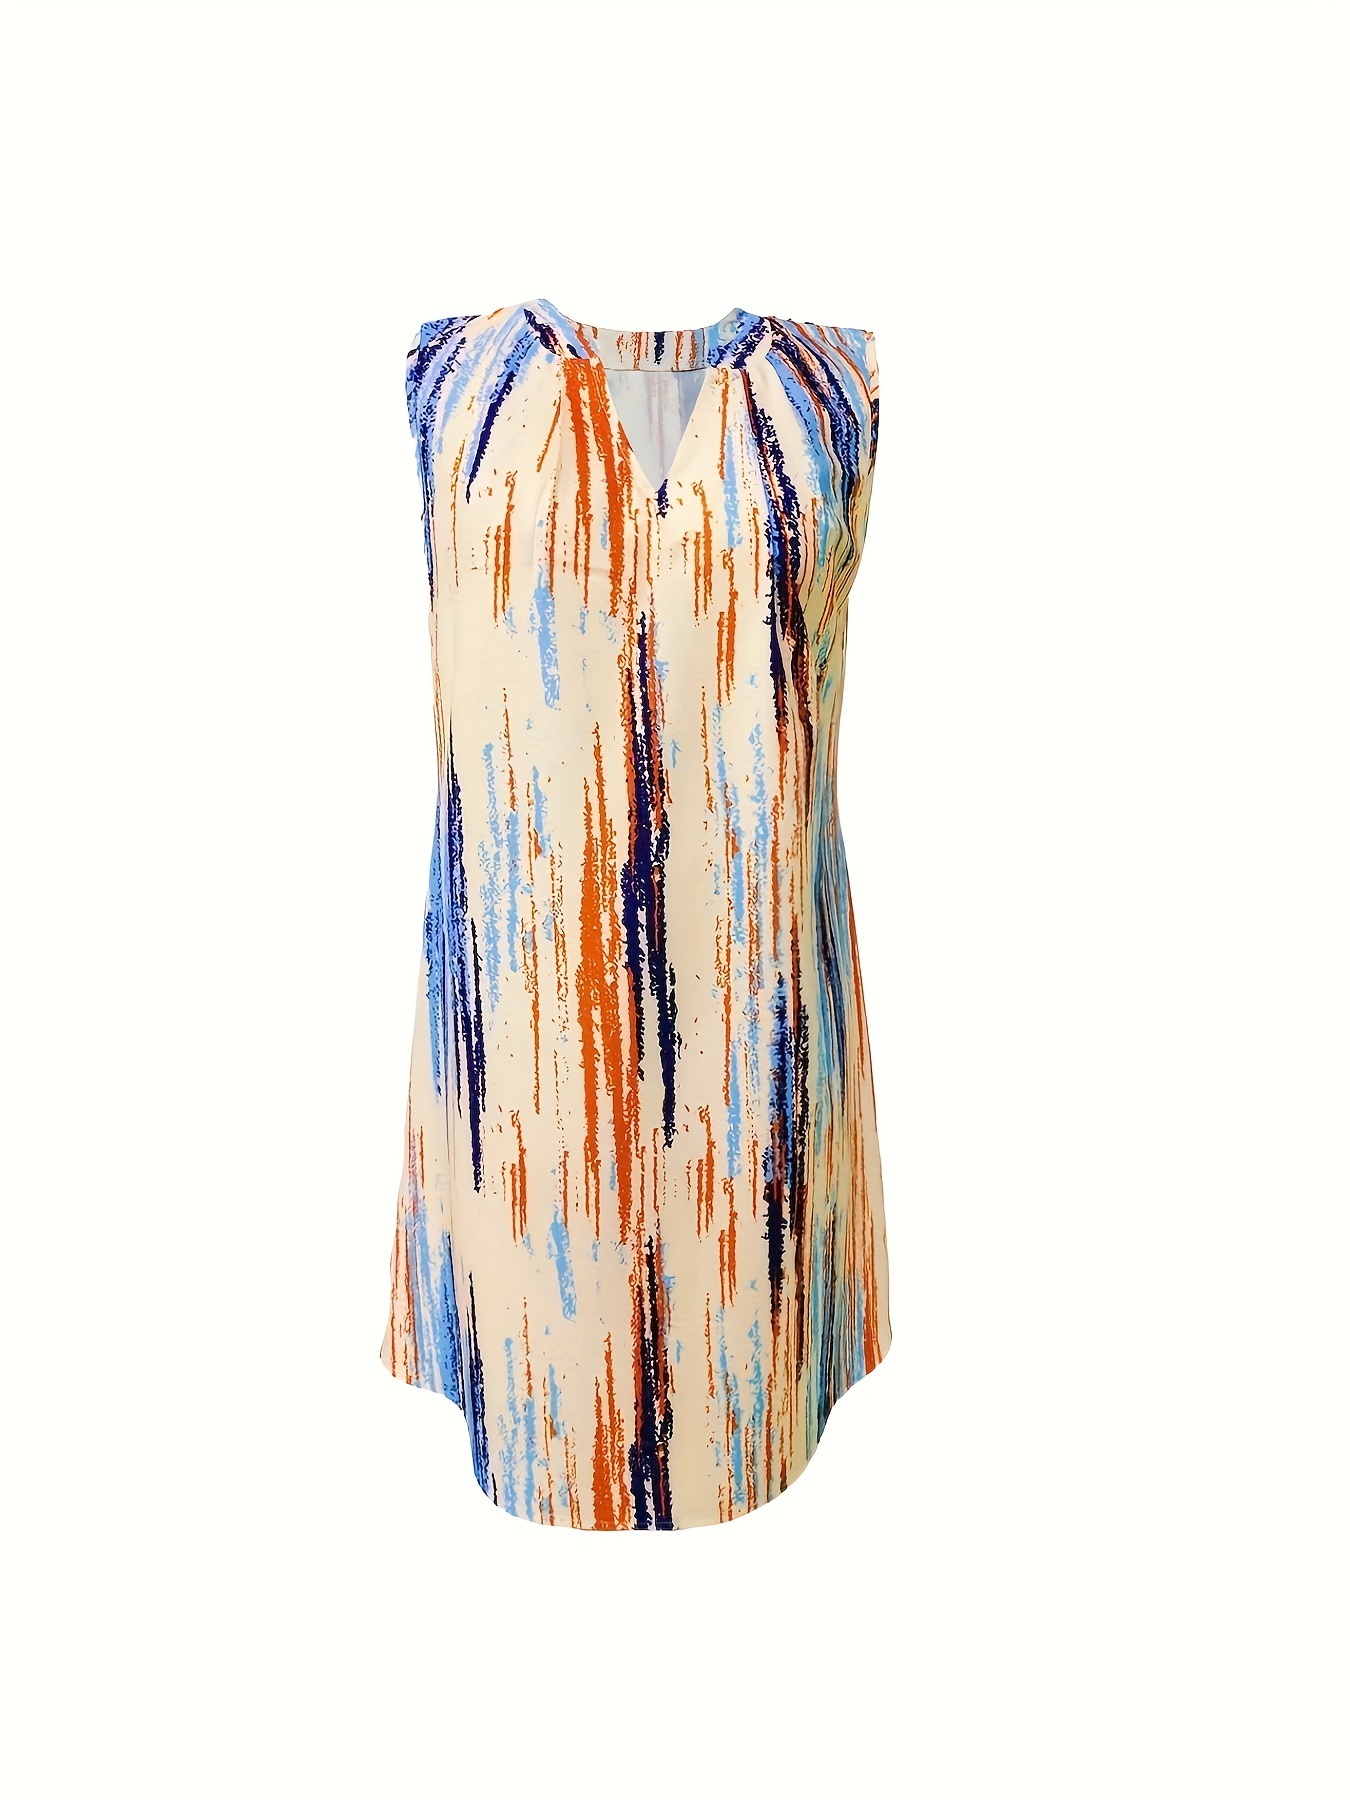 abstract ripple print dress casual v neck sleeveless dress womens clothing details 32